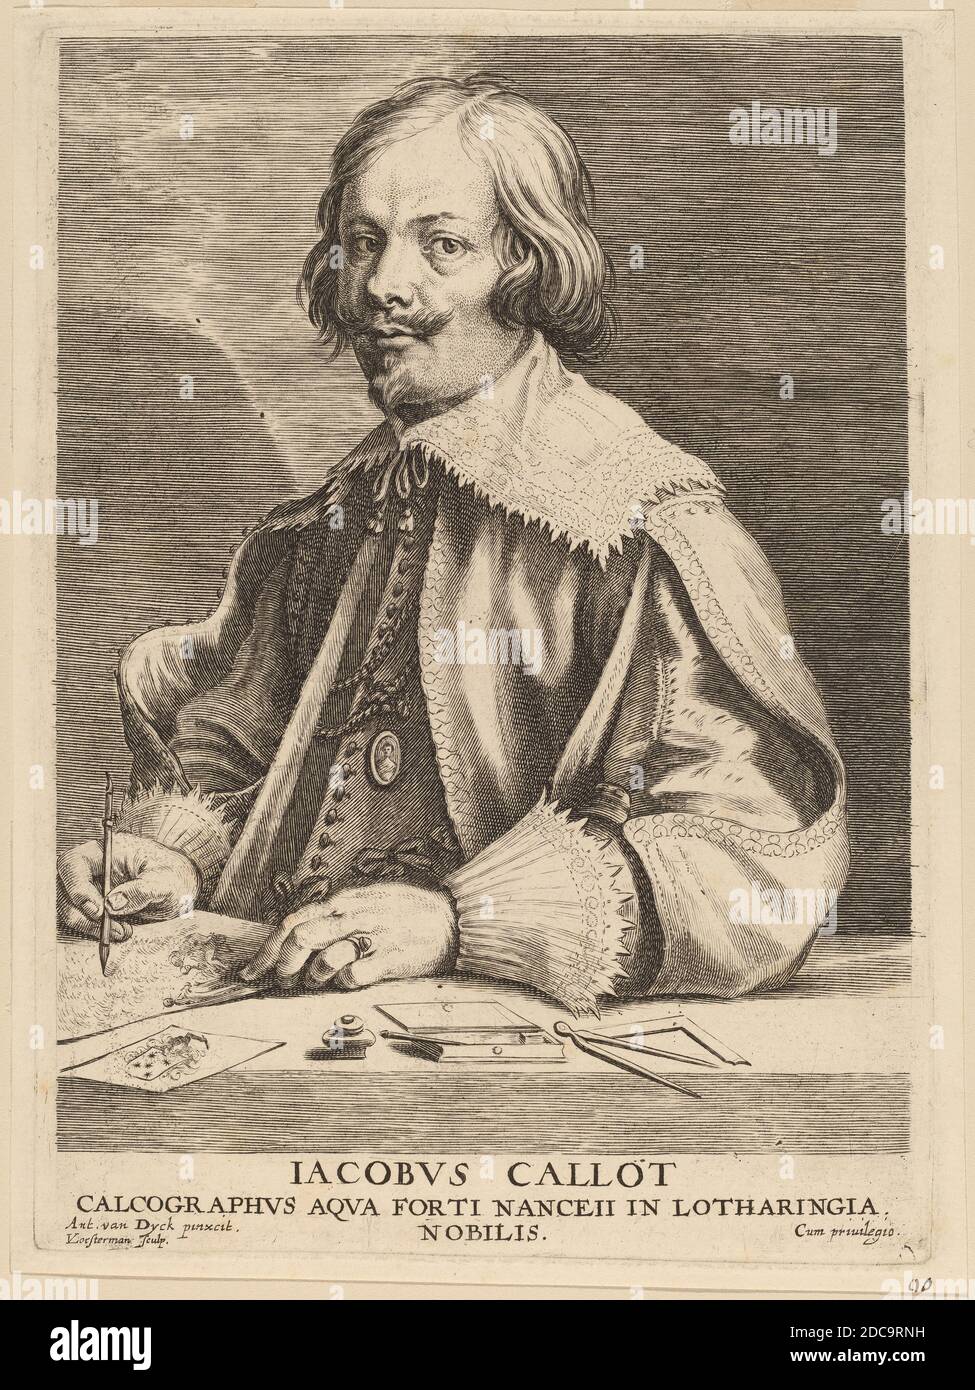 Lucas Emil Vorsterman, (artista), fiammingo, 1595 - 1675, Sir Anthony van Dyck, (artista dopo), fiammingo, 1599 - 1641, Jacques Callot, incisione Foto Stock